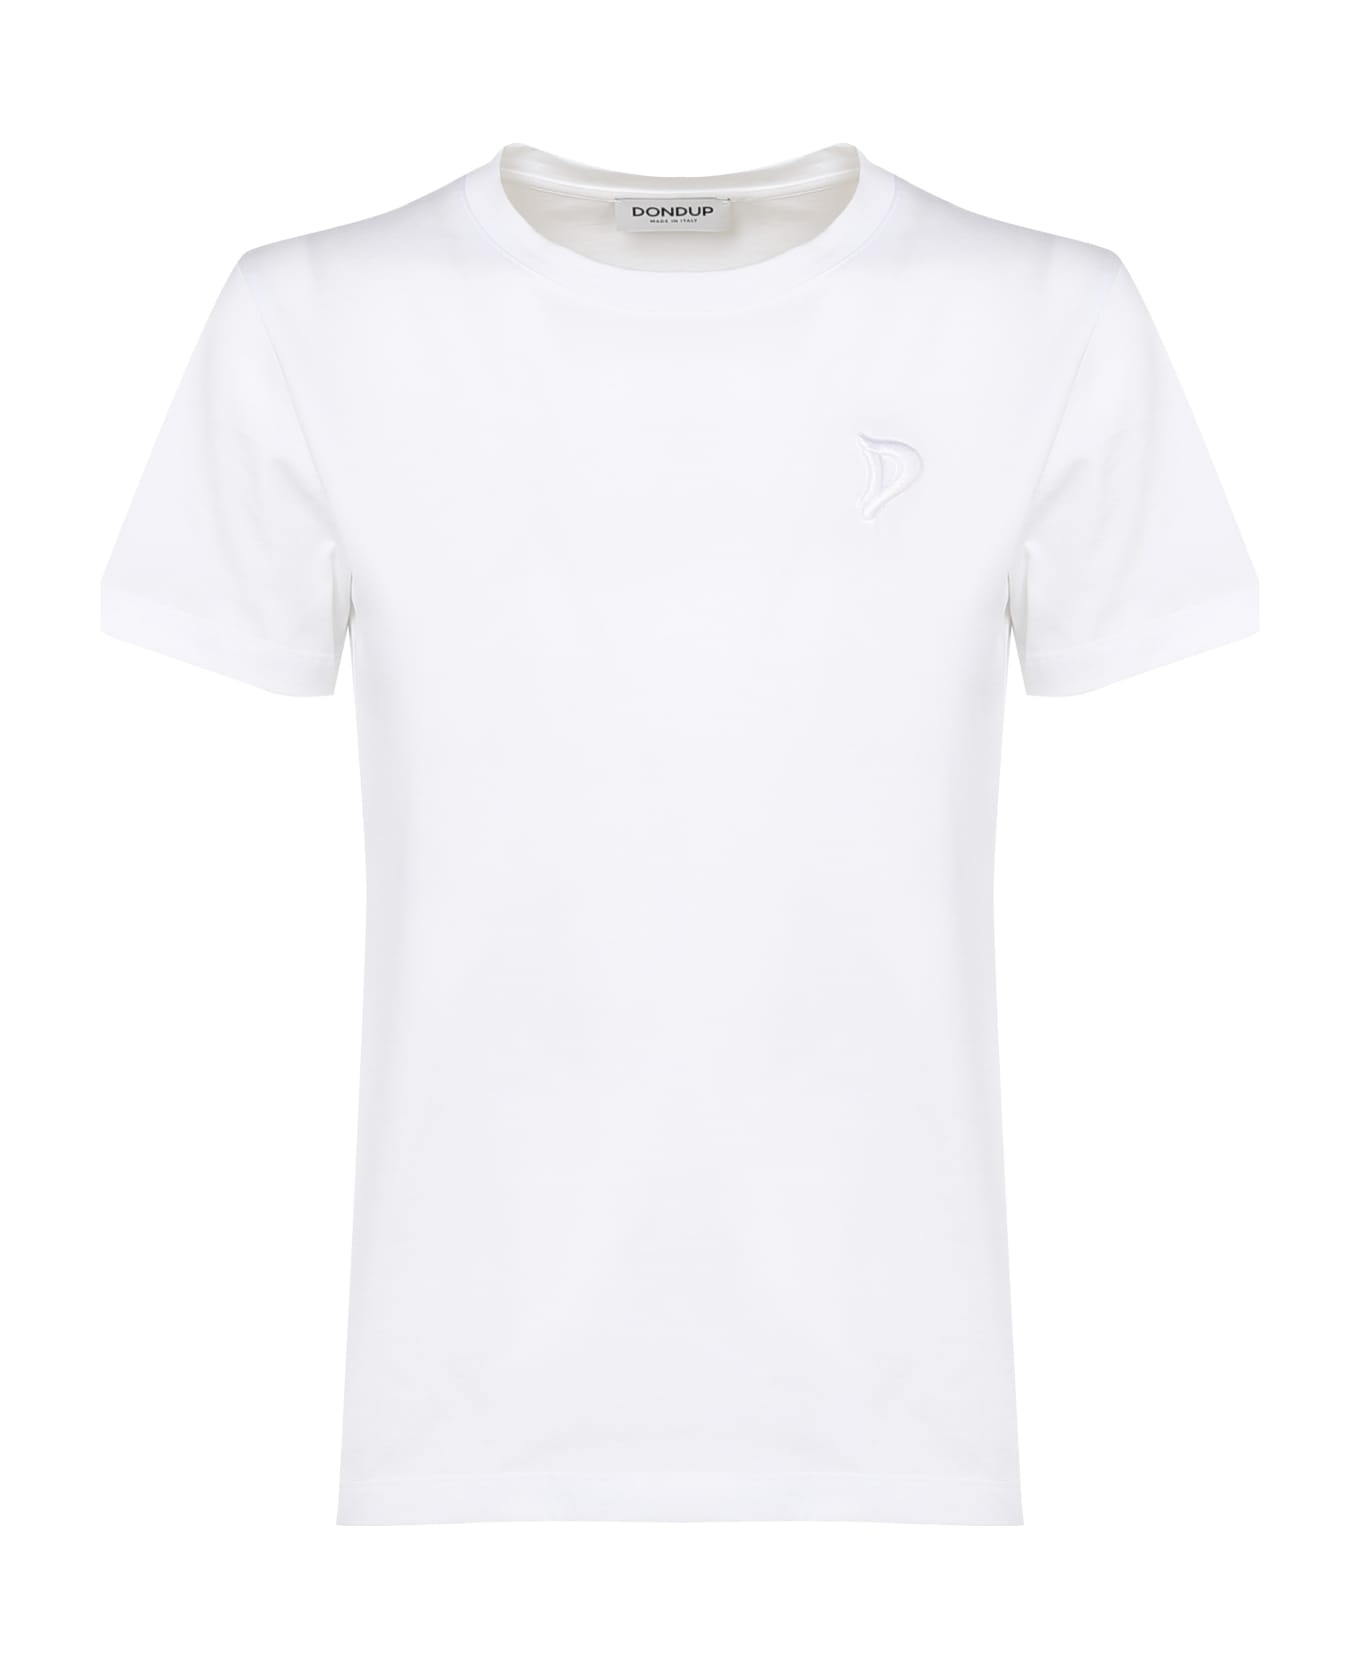 Dondup Cotton T-shirt - White